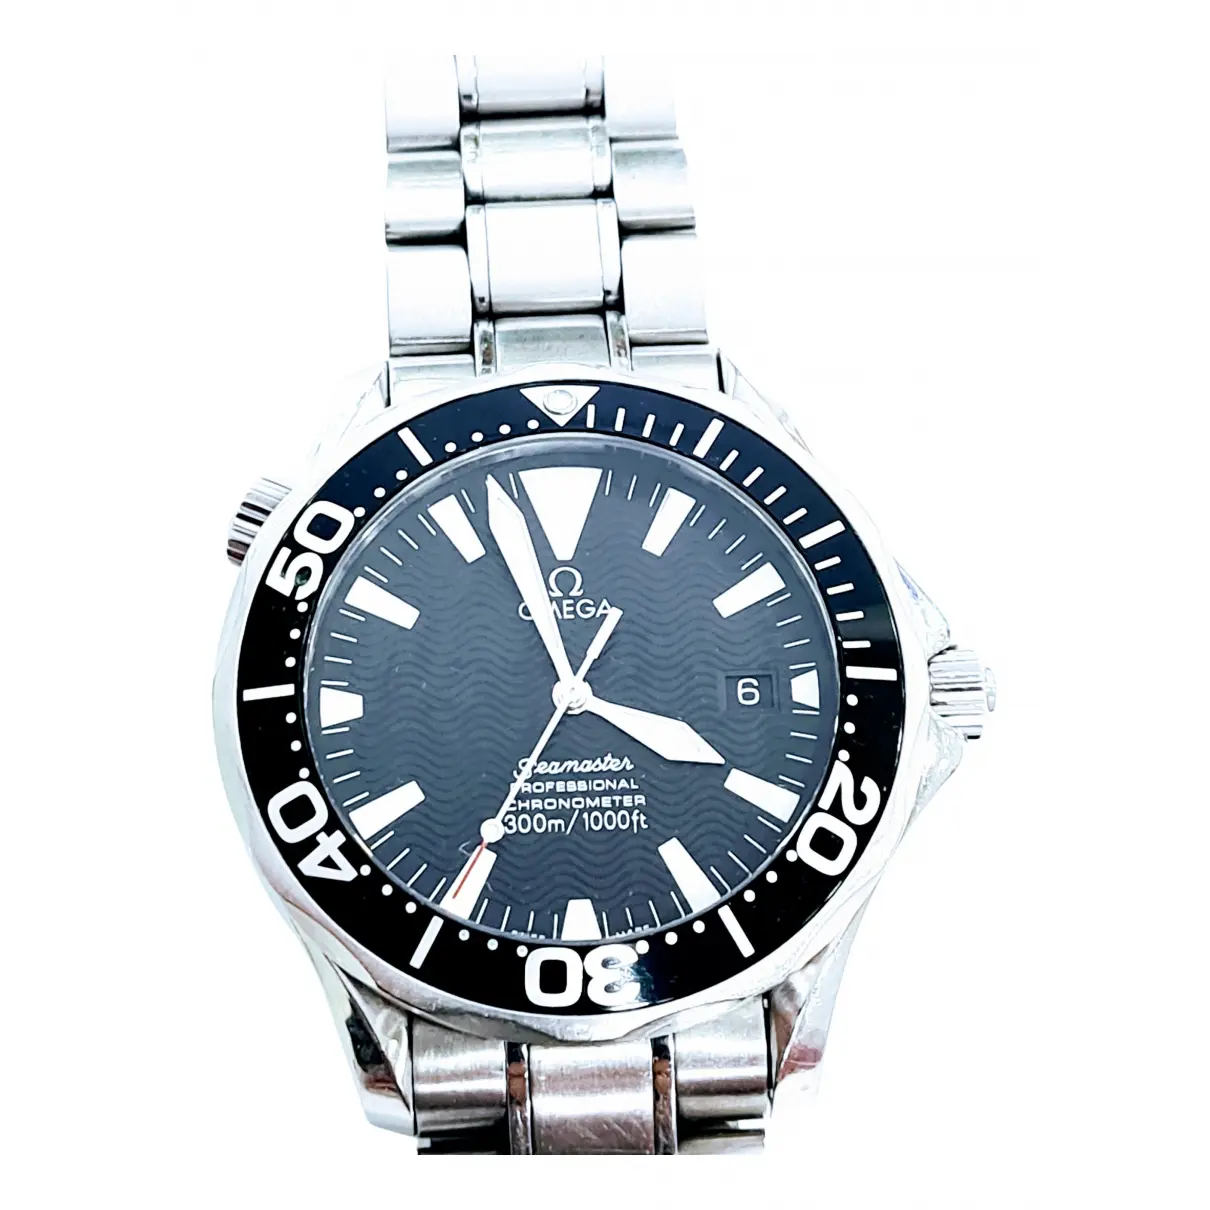 Seamaster 300 watch Omega Black in Steel - 23693838